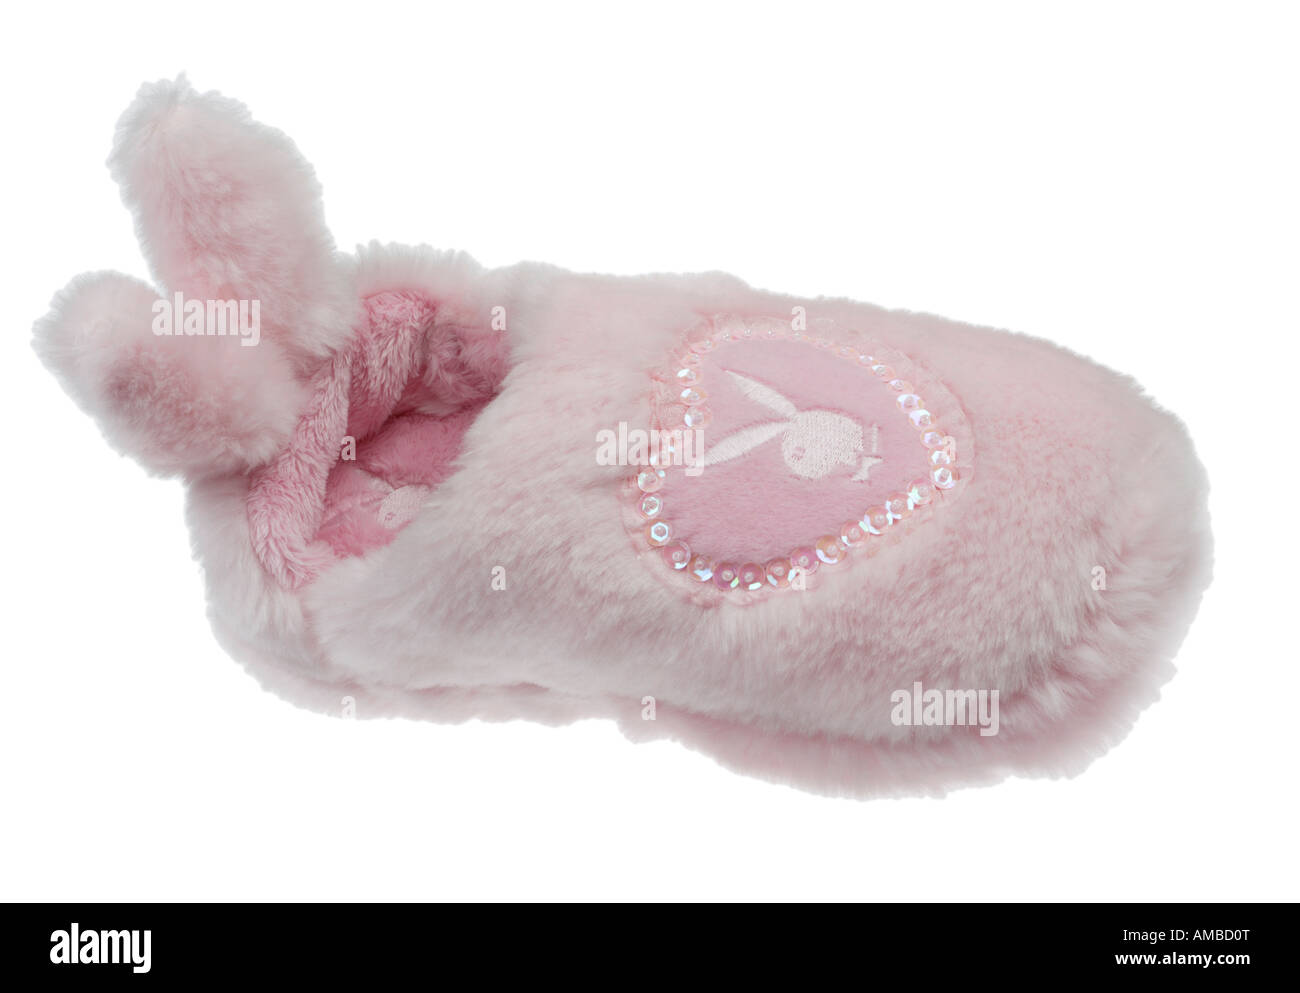 Pink fluffy Playboy bunny ragazze pantofola Foto stock - Alamy